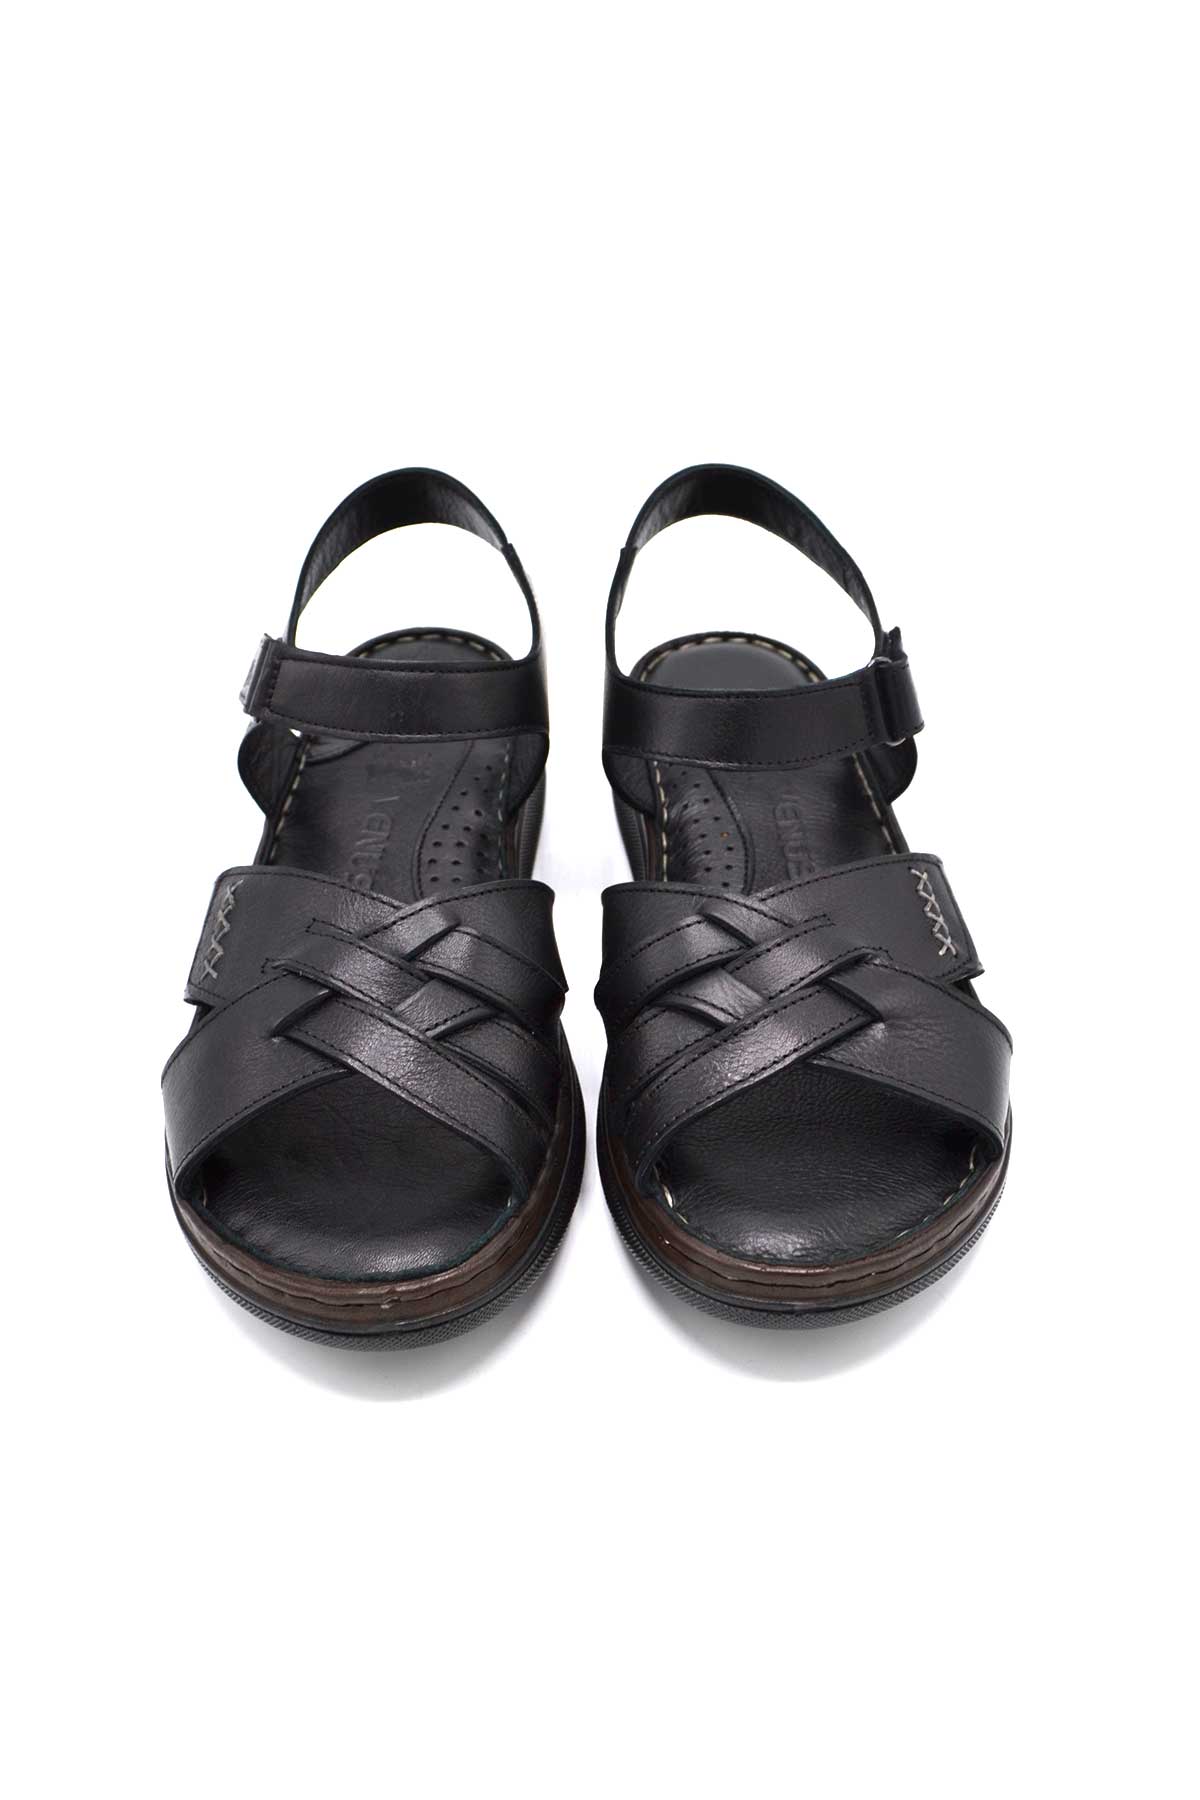 Kadın Comfort Deri Sandalet Siyah 22981709 - Thumbnail